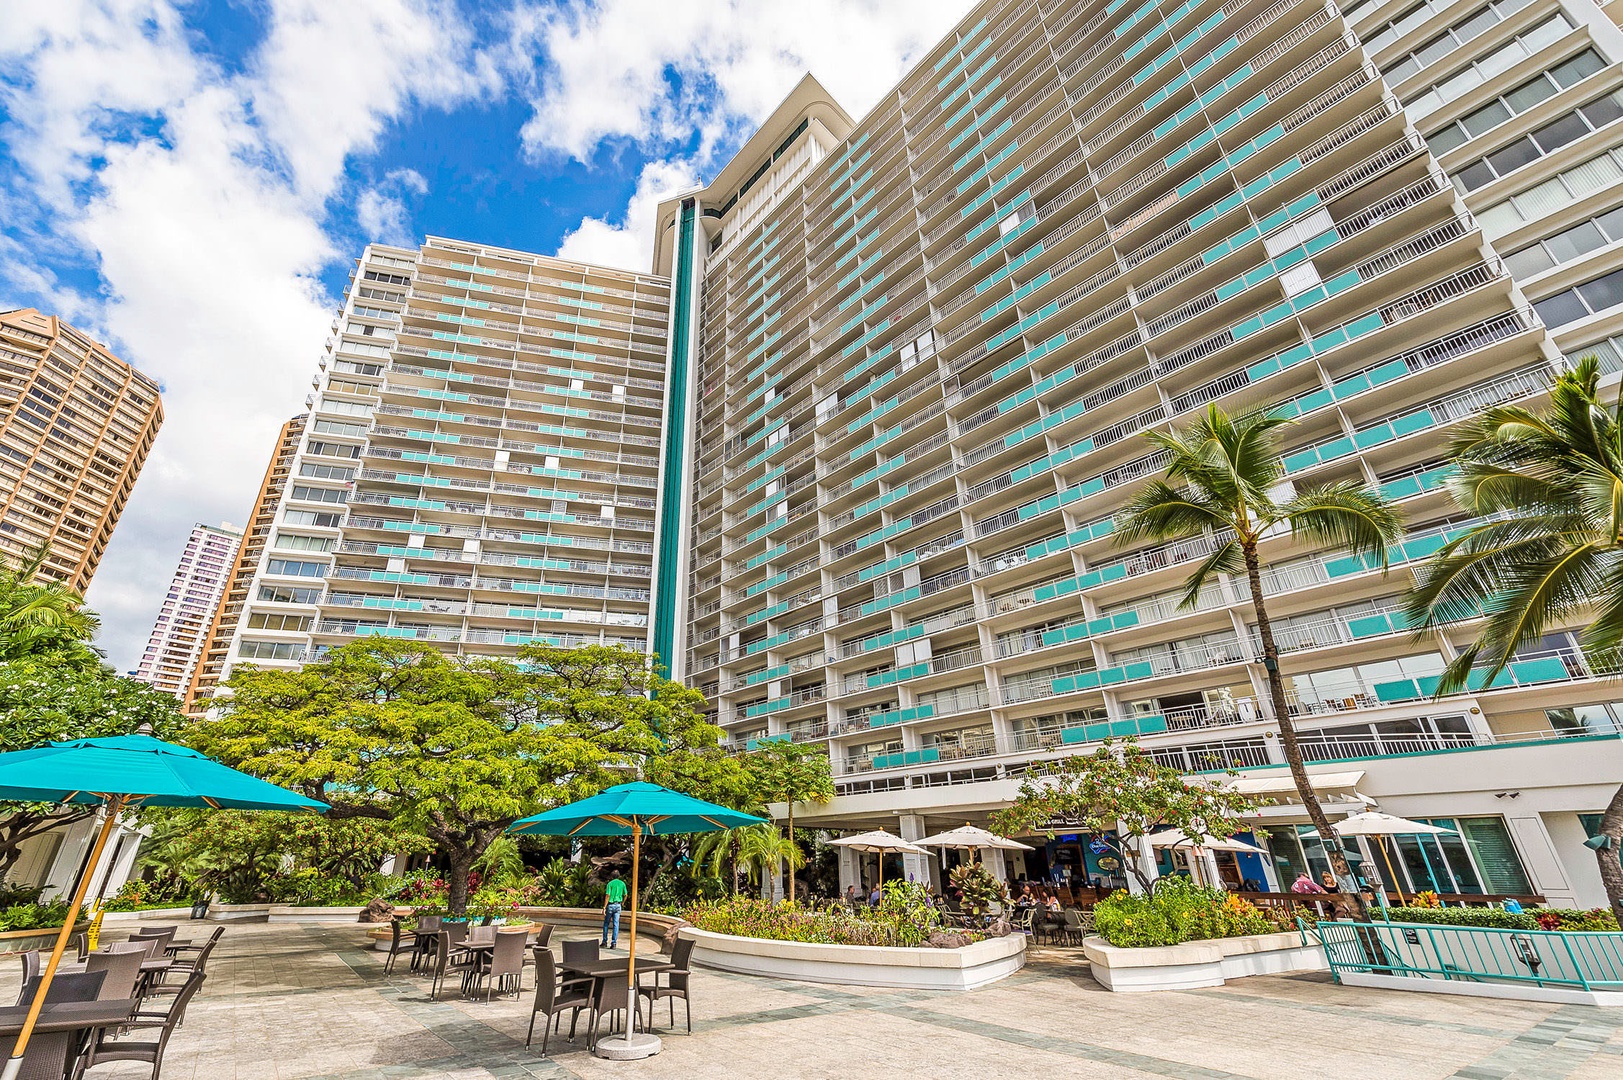 The Ilikai Hotel, close to Ala Moana shopping center, Waikiki Shell and strip, Honolulu Zoo, Diamond Head, beach